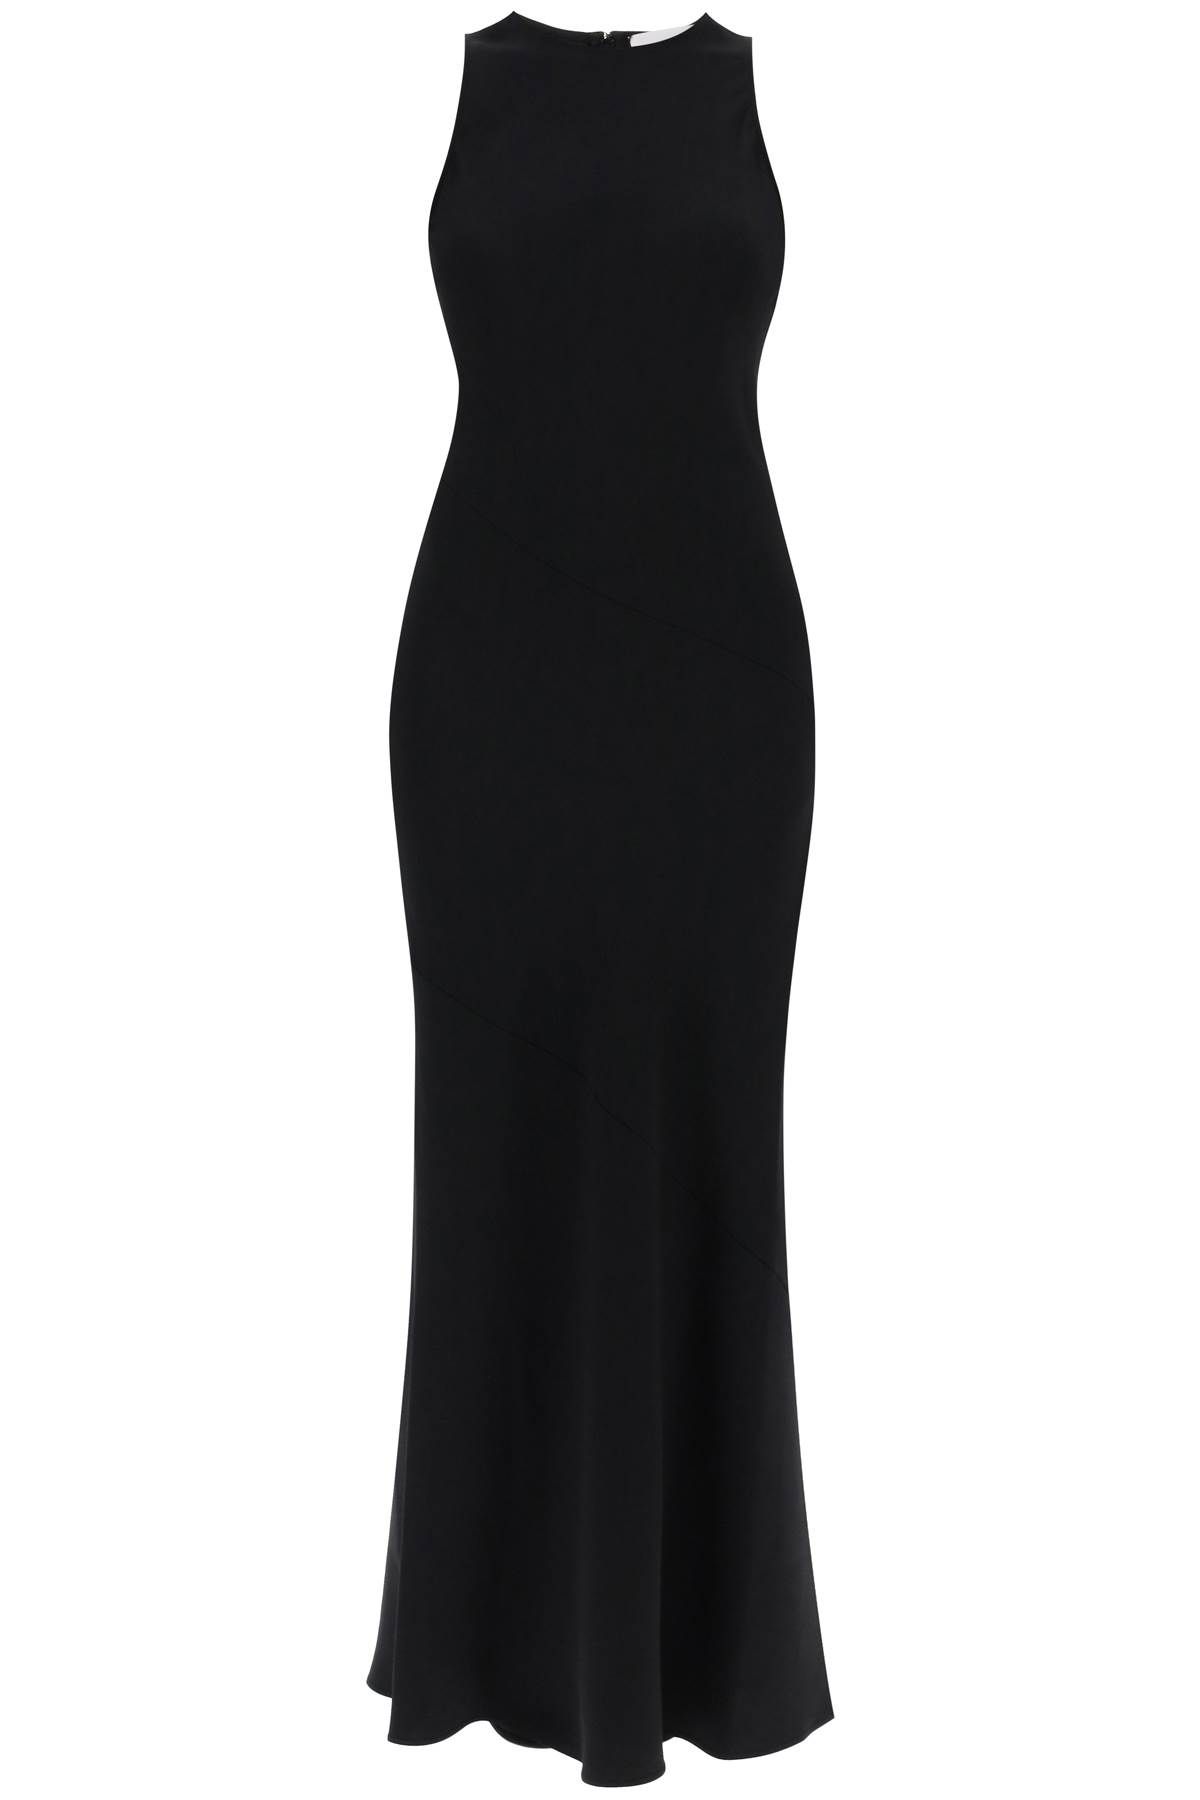 Shop Ami Alexandre Mattiussi Maxi Crepe Dress With Bias Cuts In Black